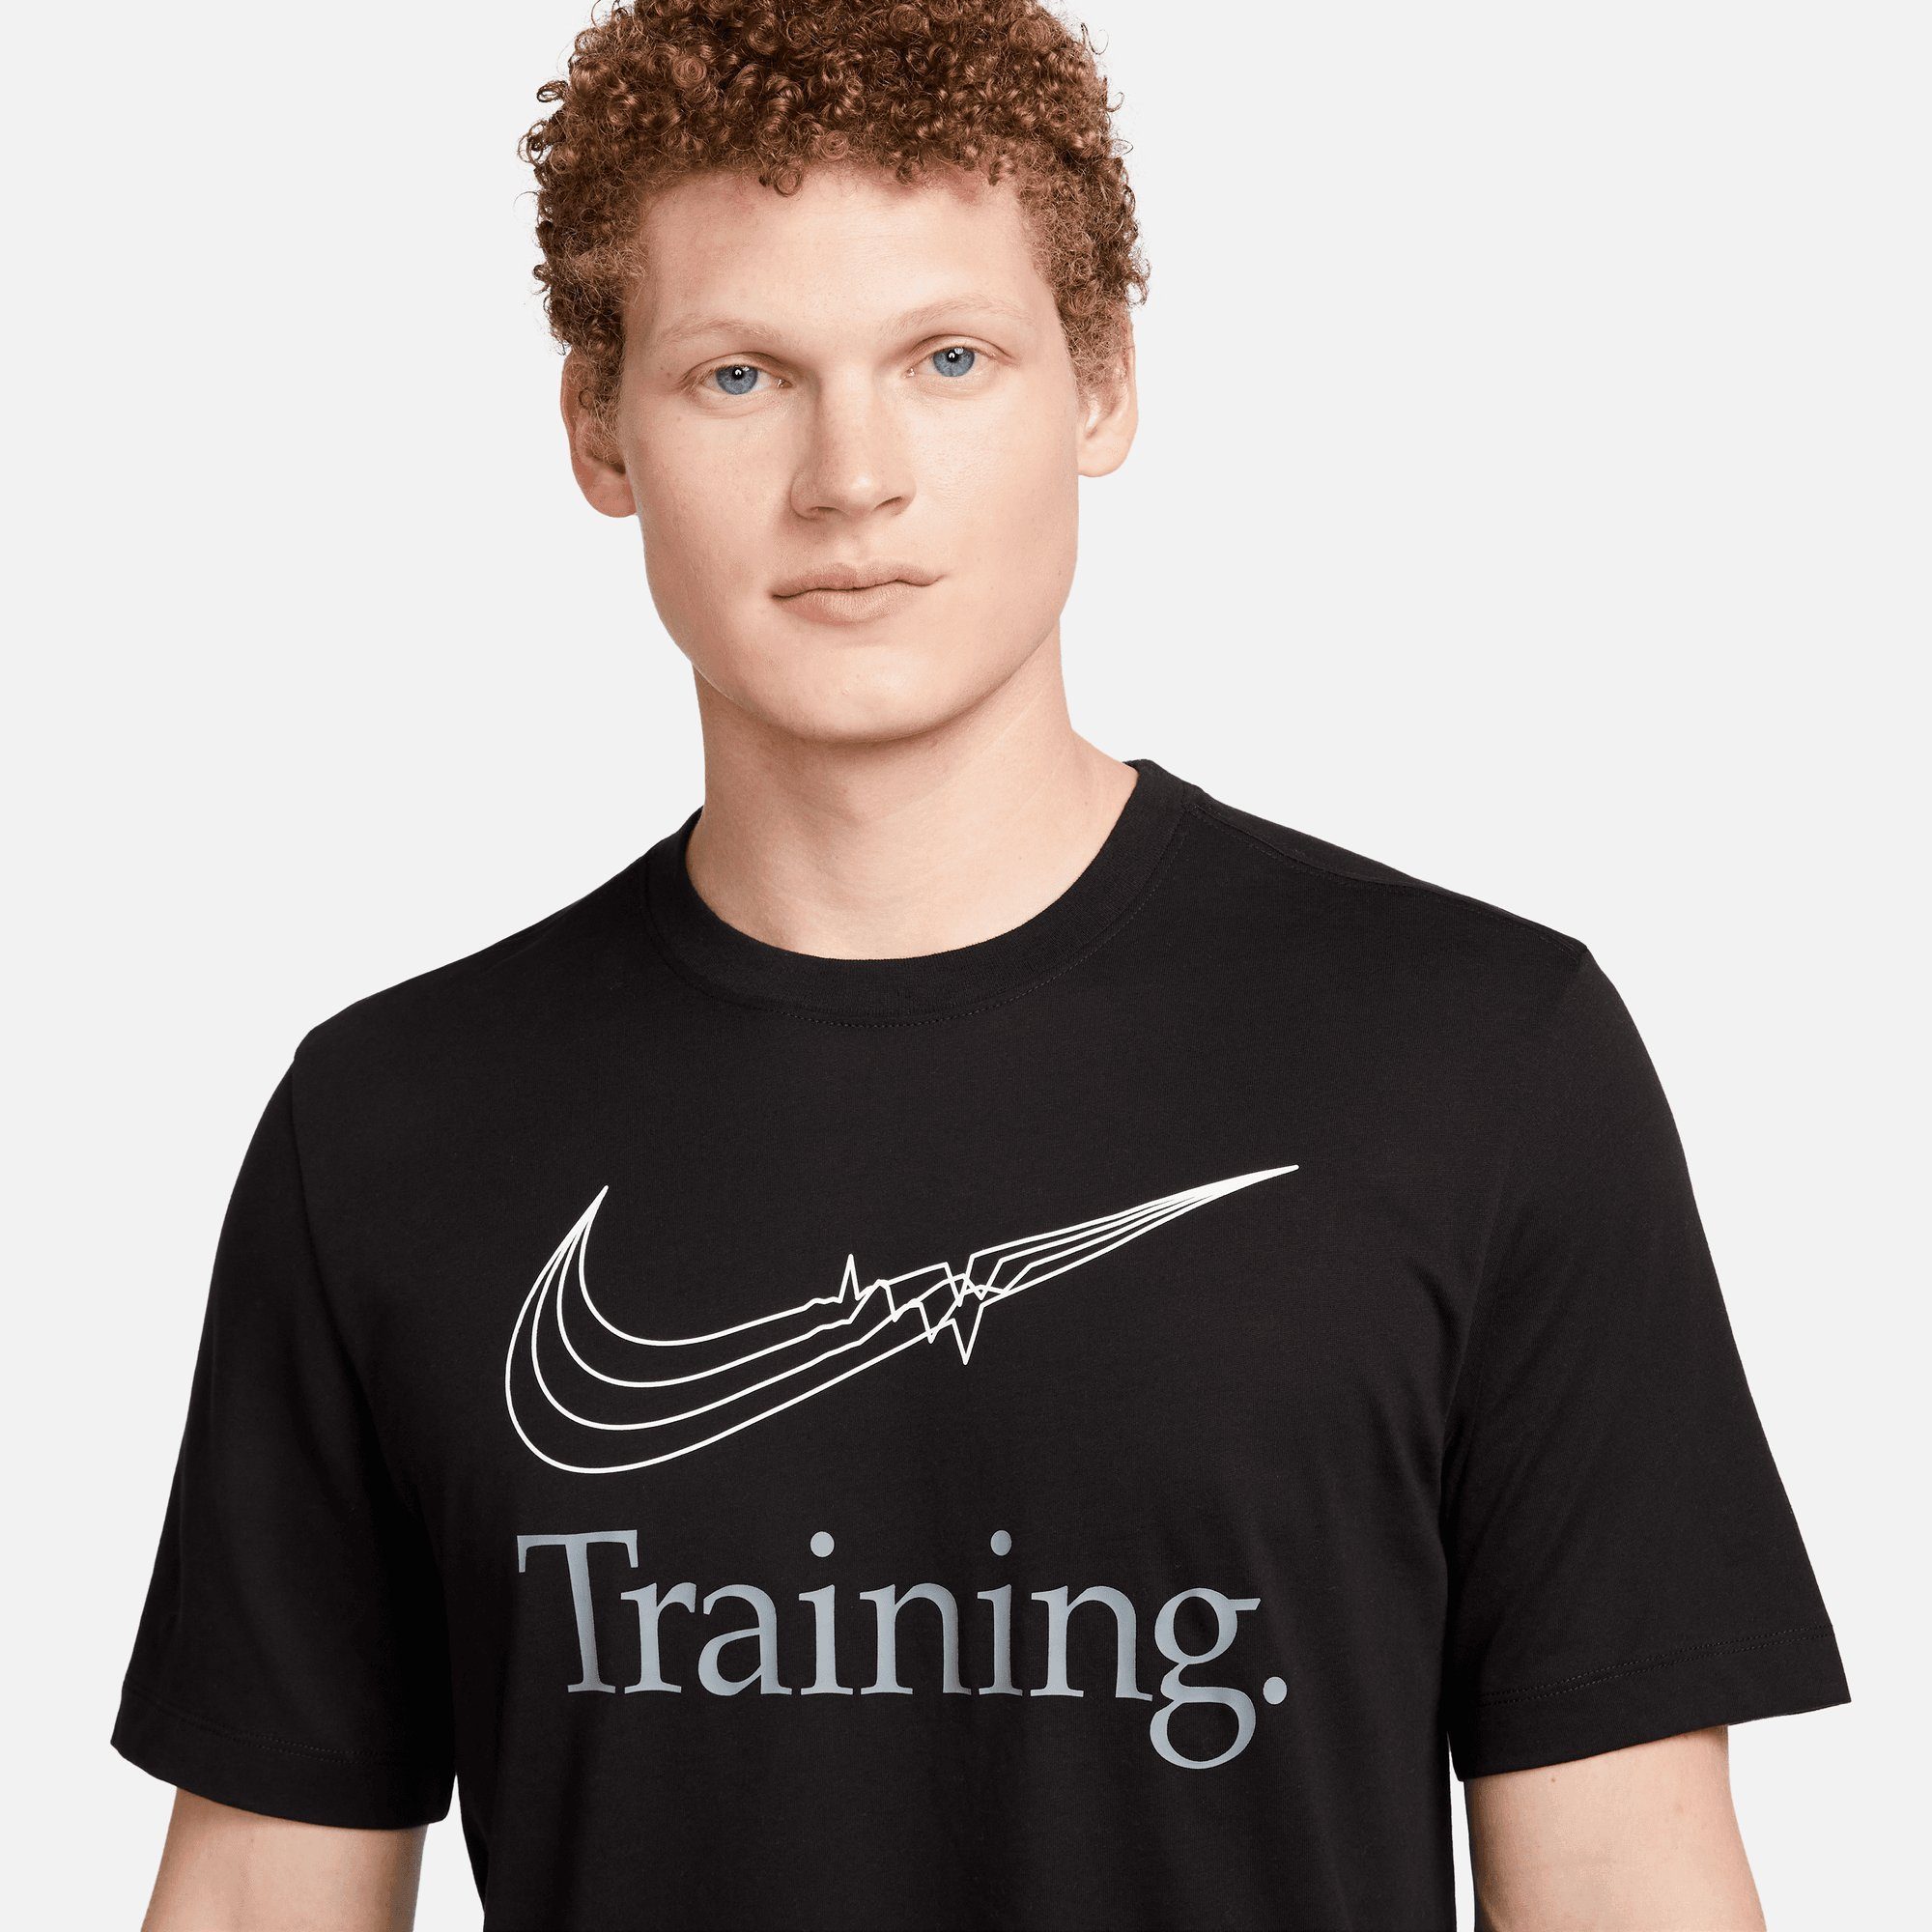 MEN'S Nike TRAINING DRI-FIT Trainingsshirt T-SHIRT